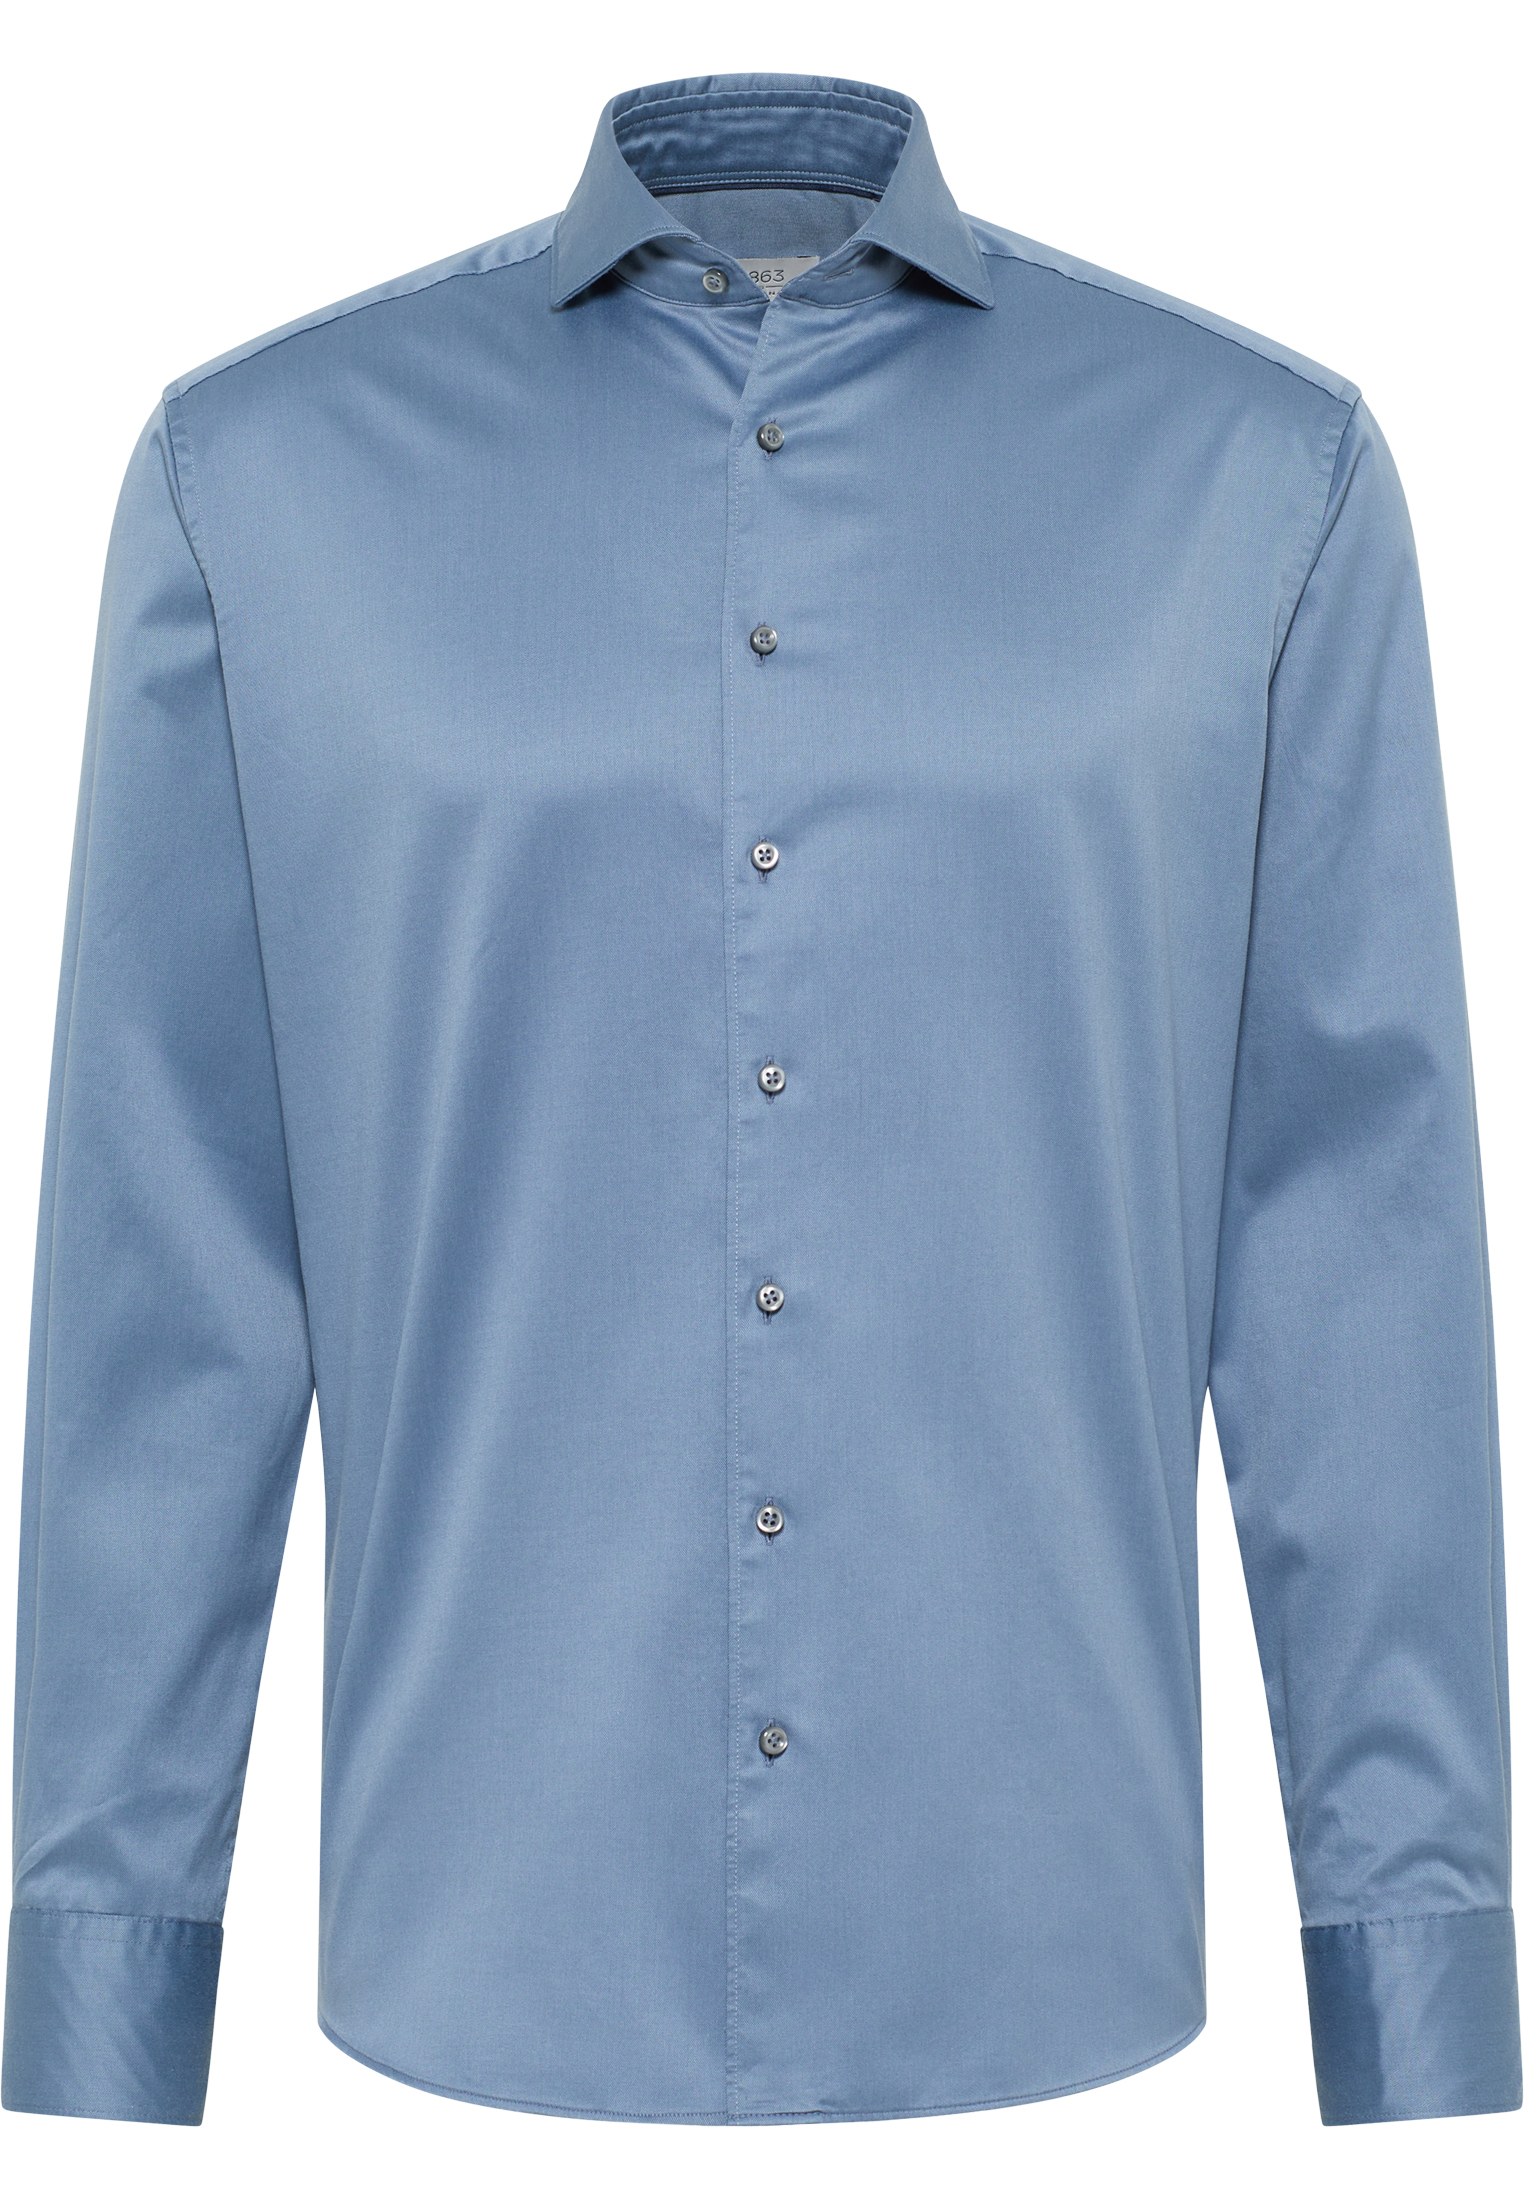 MODERN FIT Soft Luxury Shirt bleu ciel uni